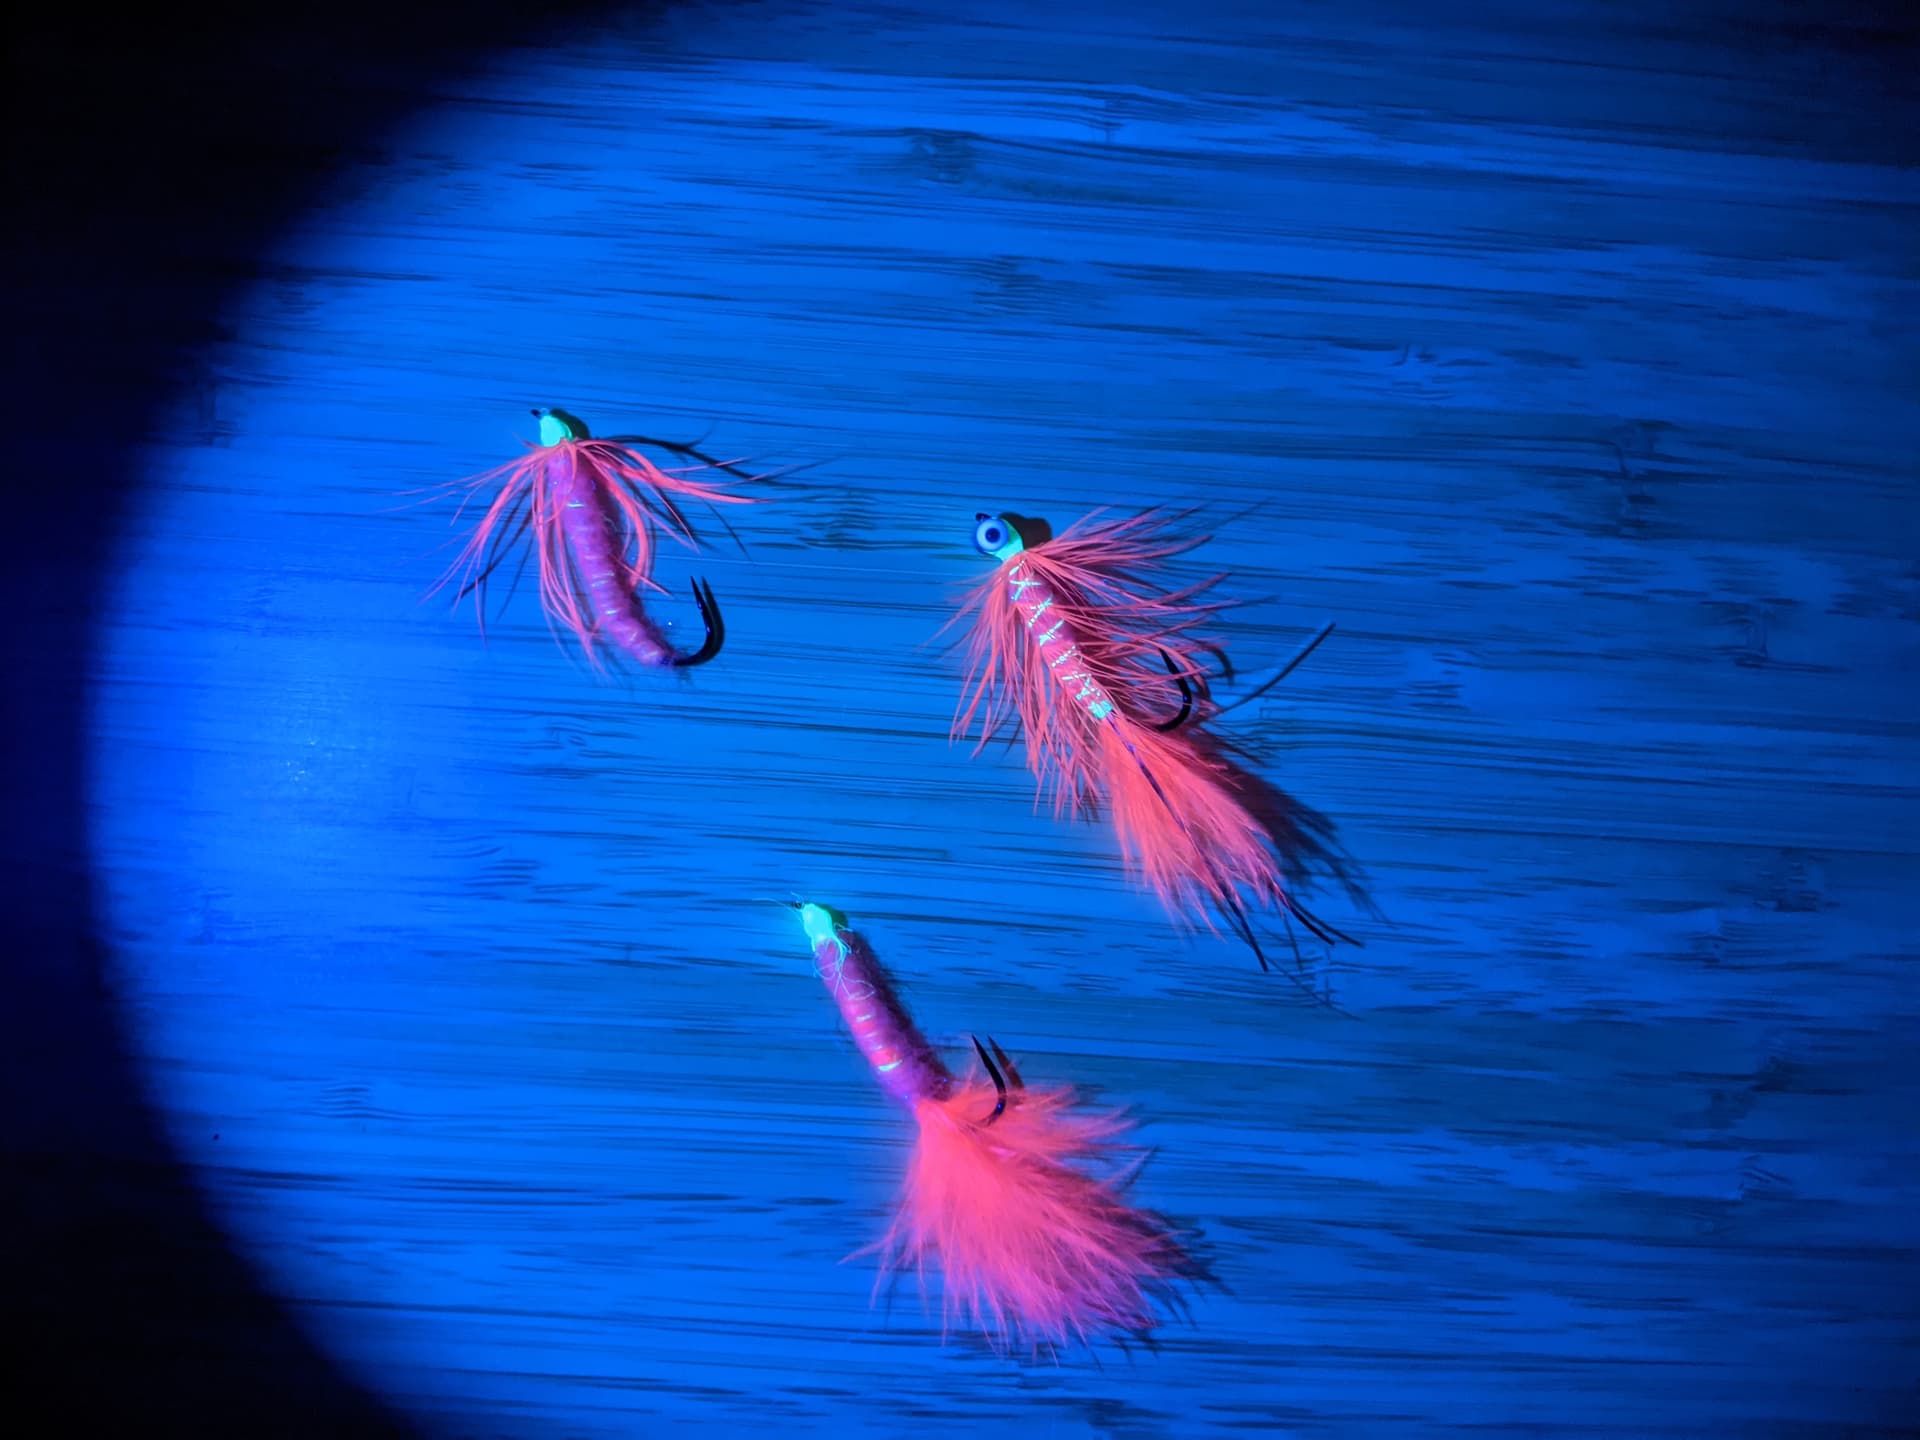 Chum Salmon Flies - Flies - Alaska Fly Fishing Goods